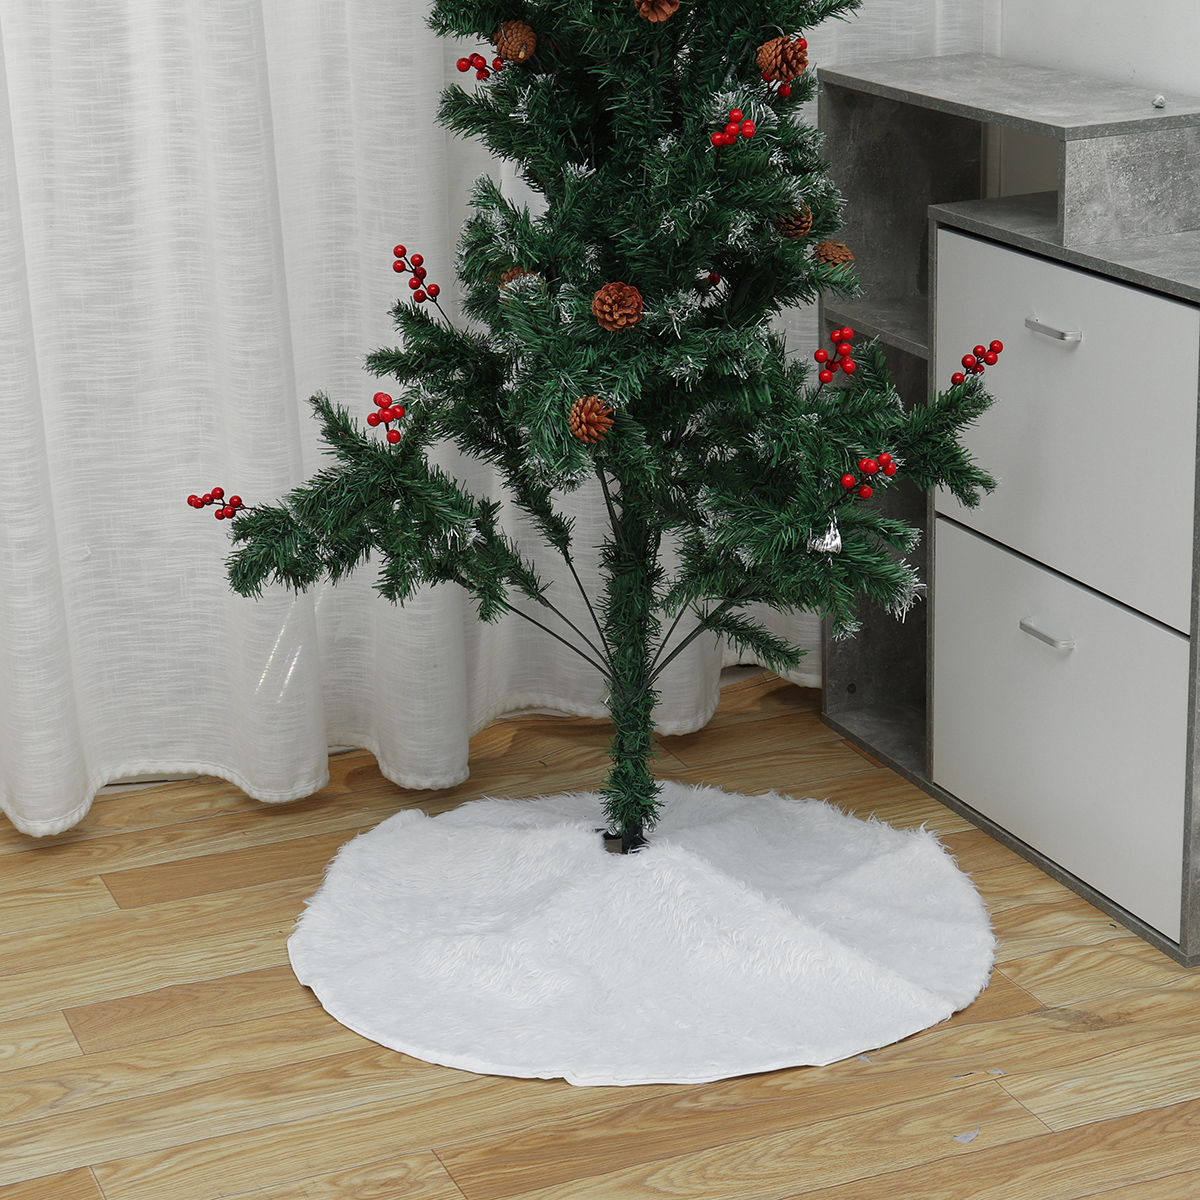 3548inch-Christmas-Tree-Dress-Skirt-Decor-Carpet-Xmas-Decoration-for-2020-Christmas-Party-Decoration-1775188-14